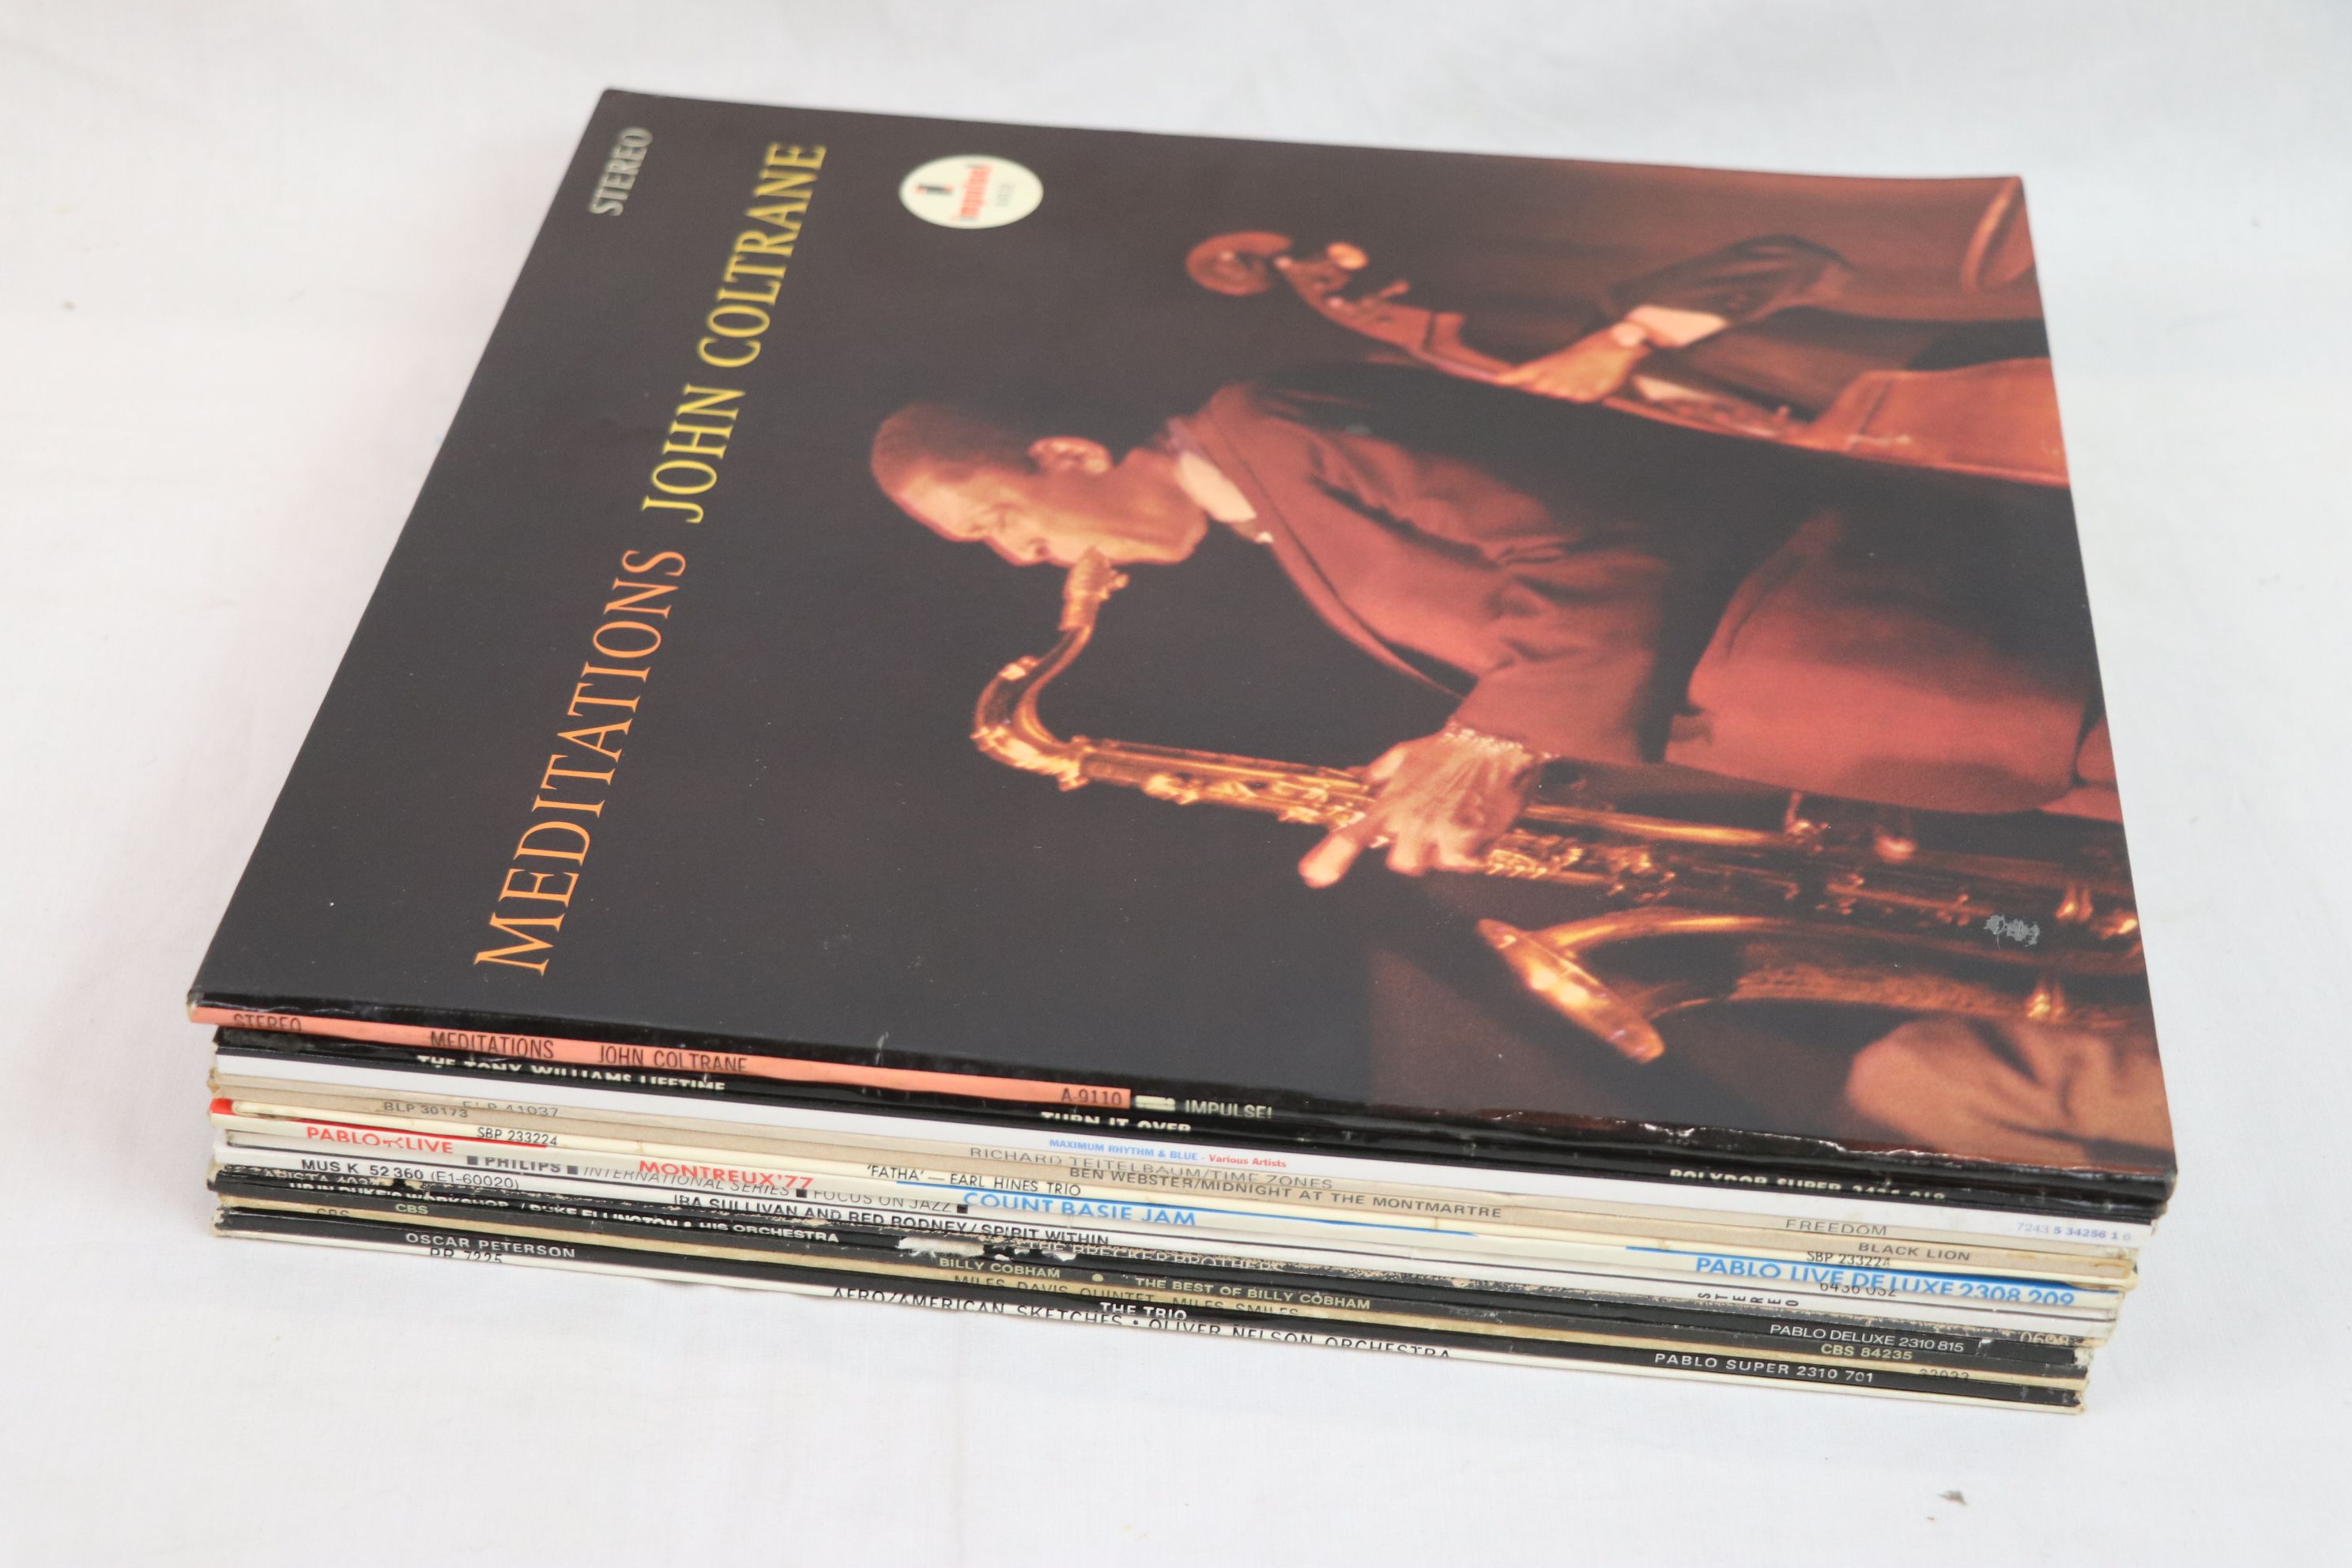 Vinyl - Collection of 15 x Jazz vinyl LP's to include Meditations - John Coltrane (Impulse A- - Image 2 of 17